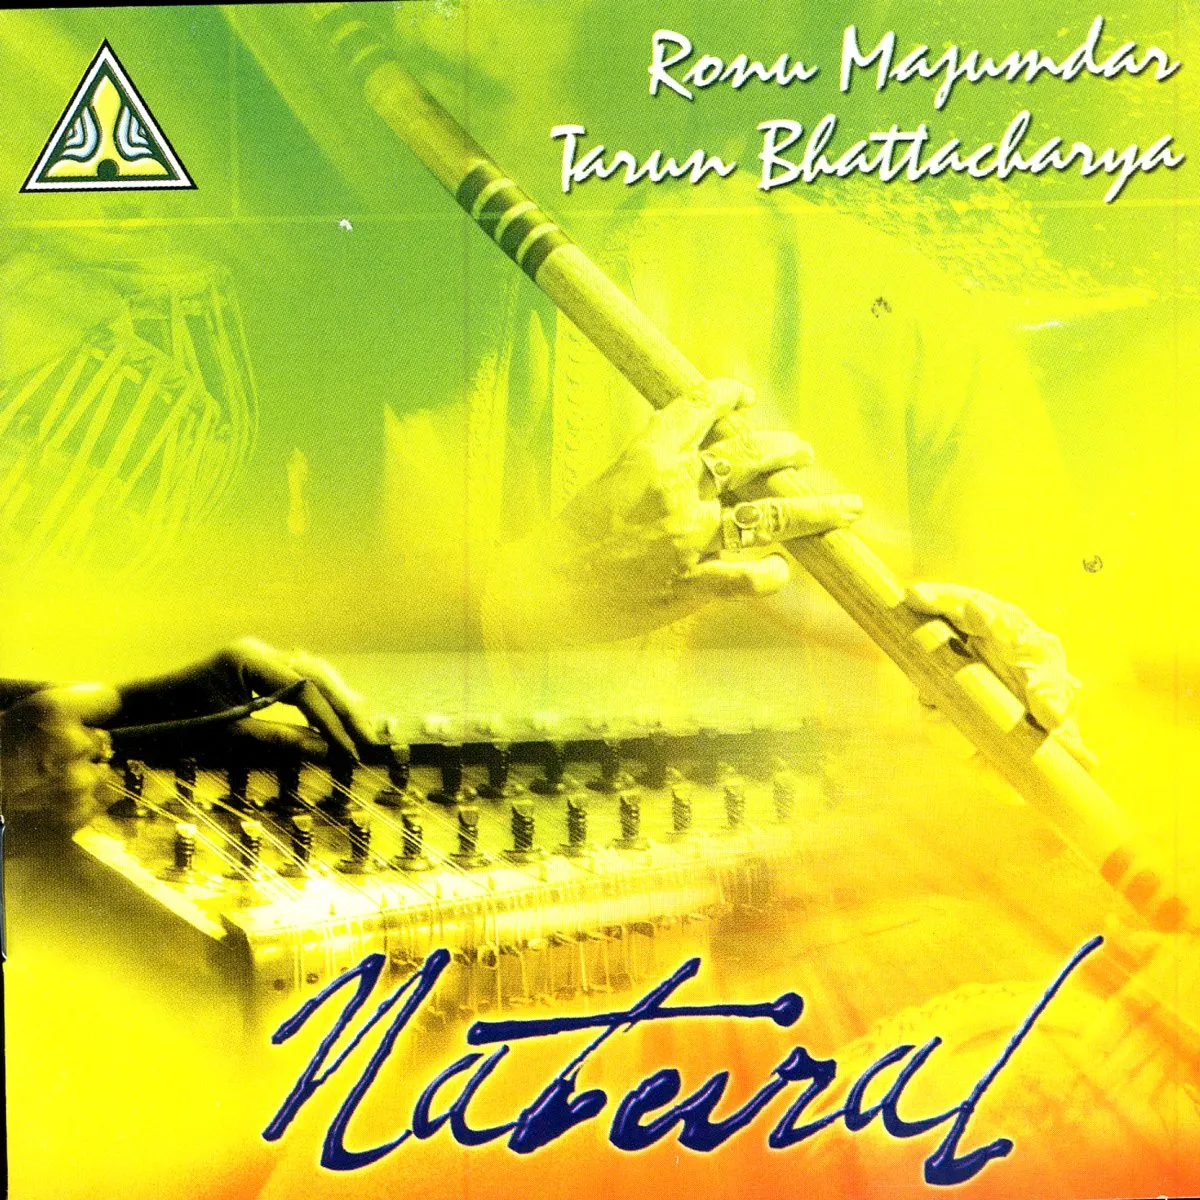 Ronu Majumbar, Tarun Bhattacharya - Natural : CD